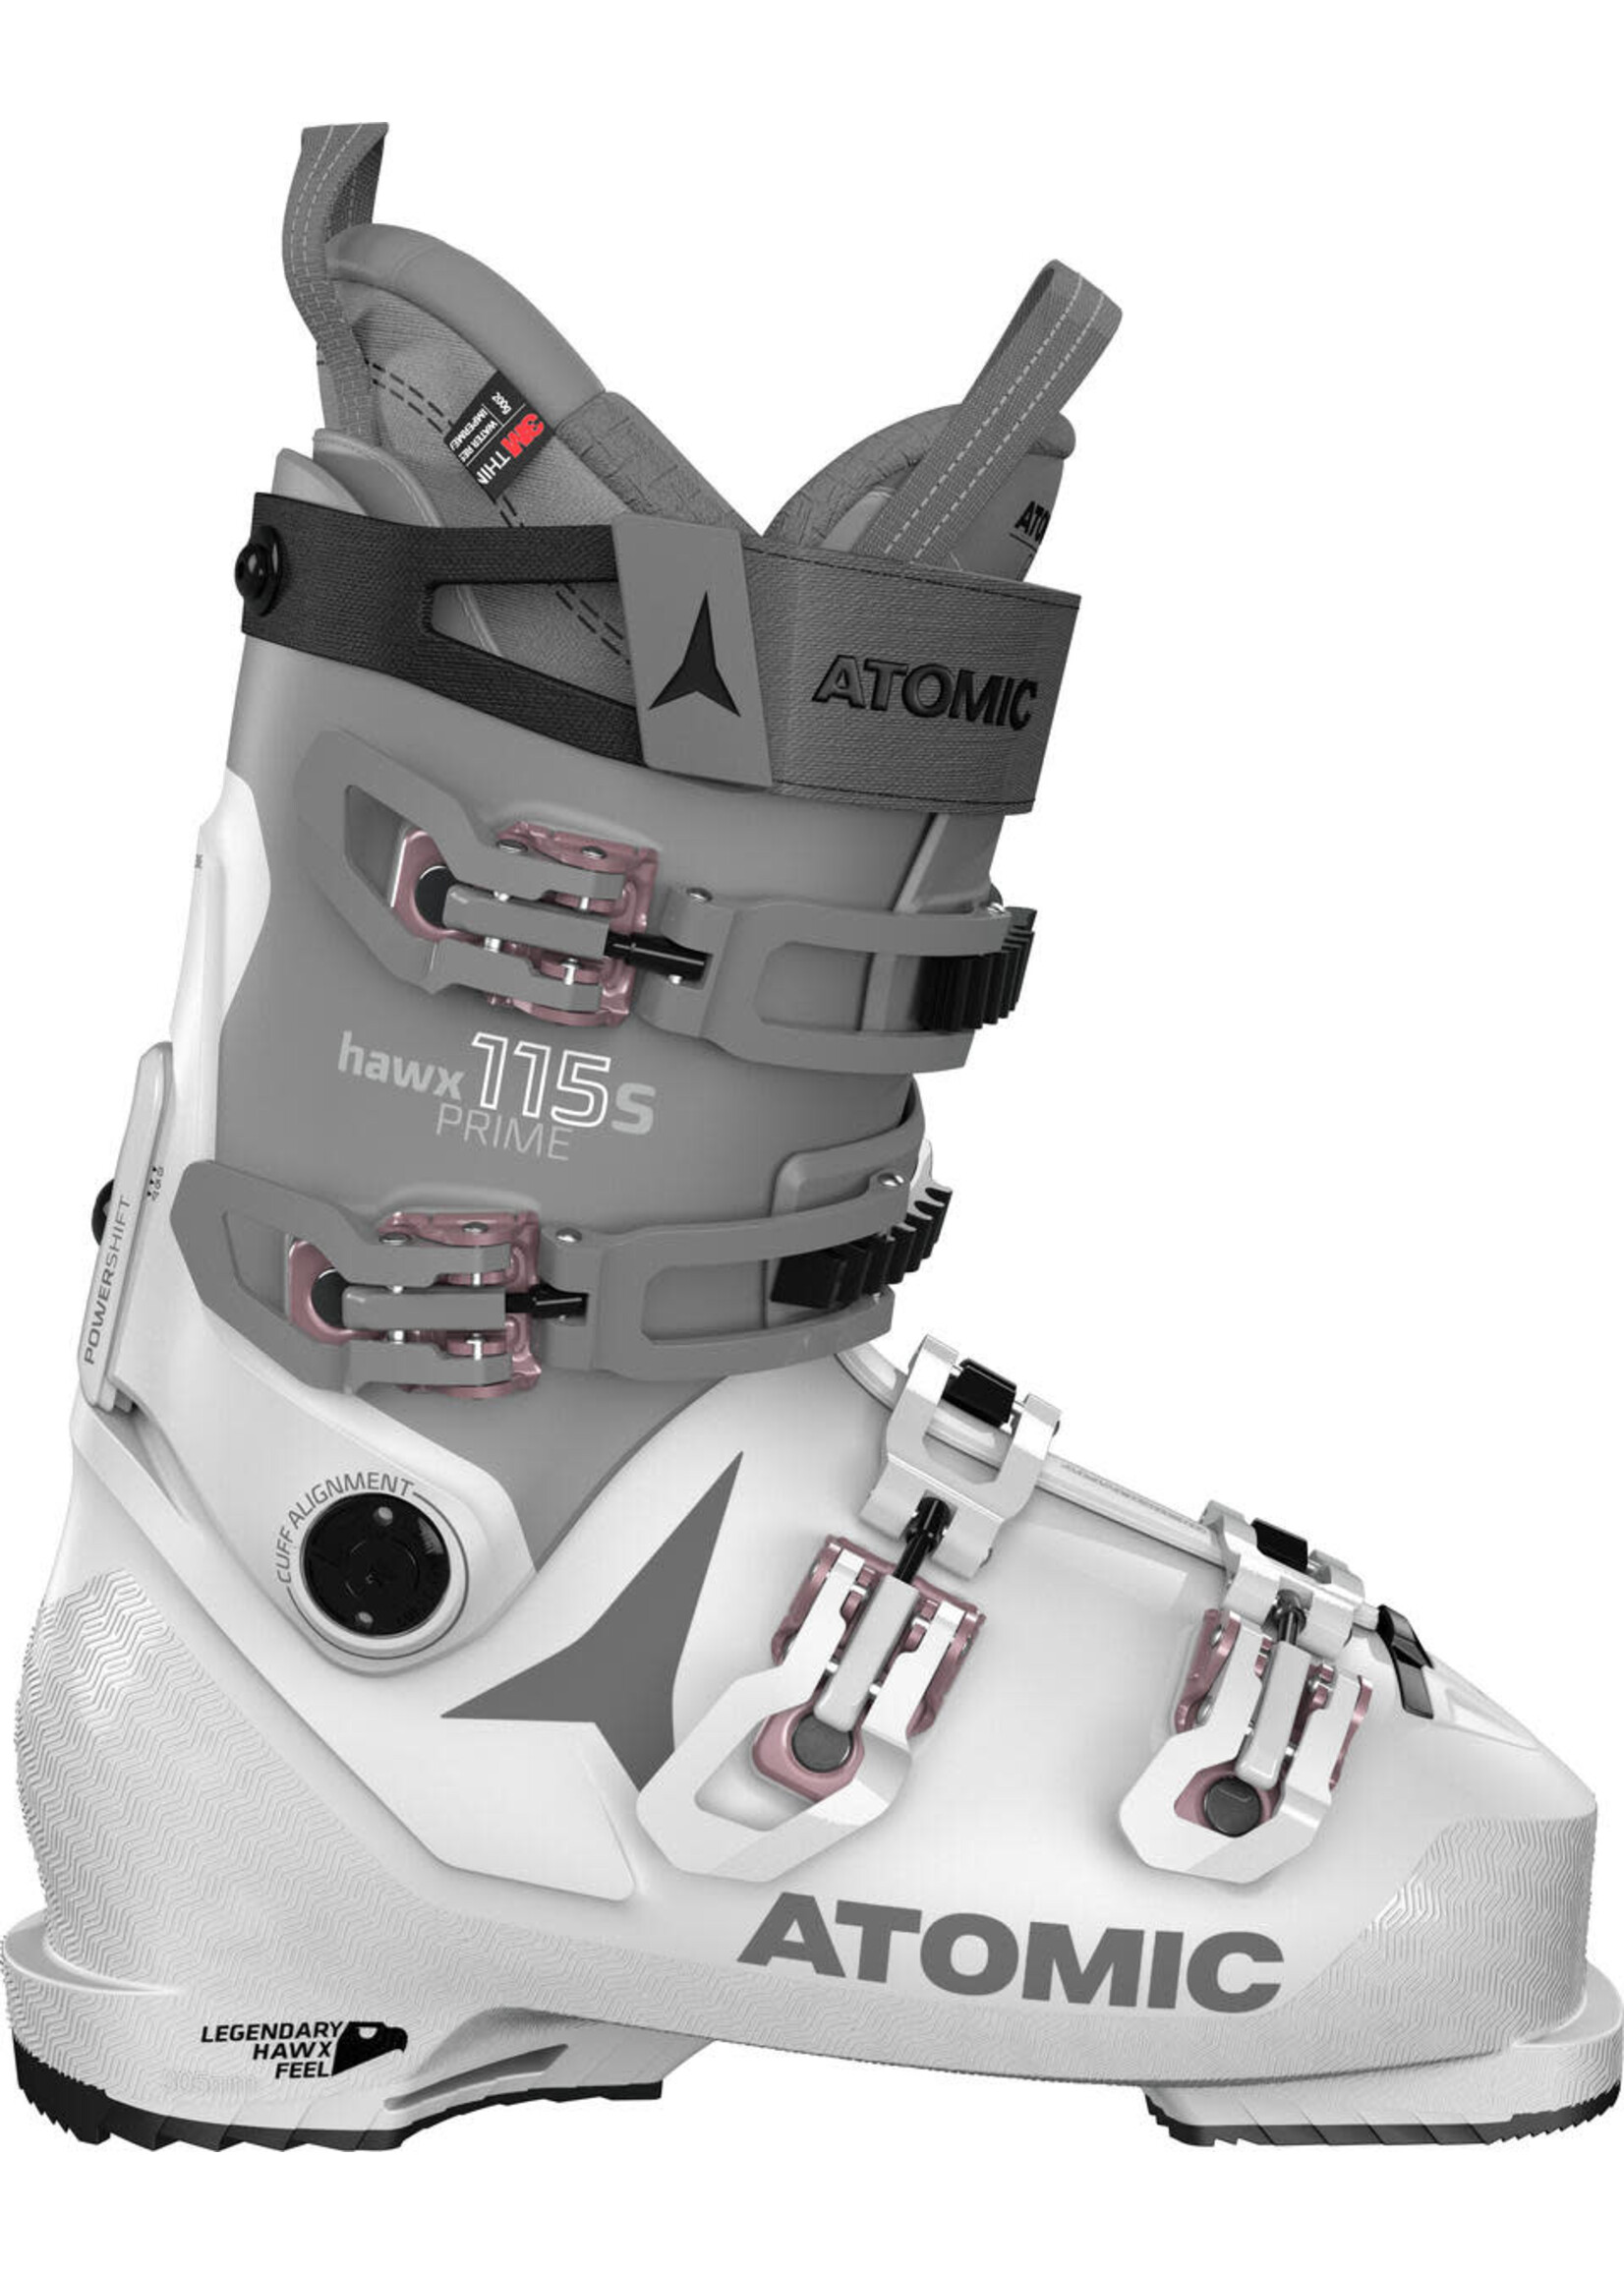 Atomic Ski Boot Alpine W. Hawx Prime 115 S